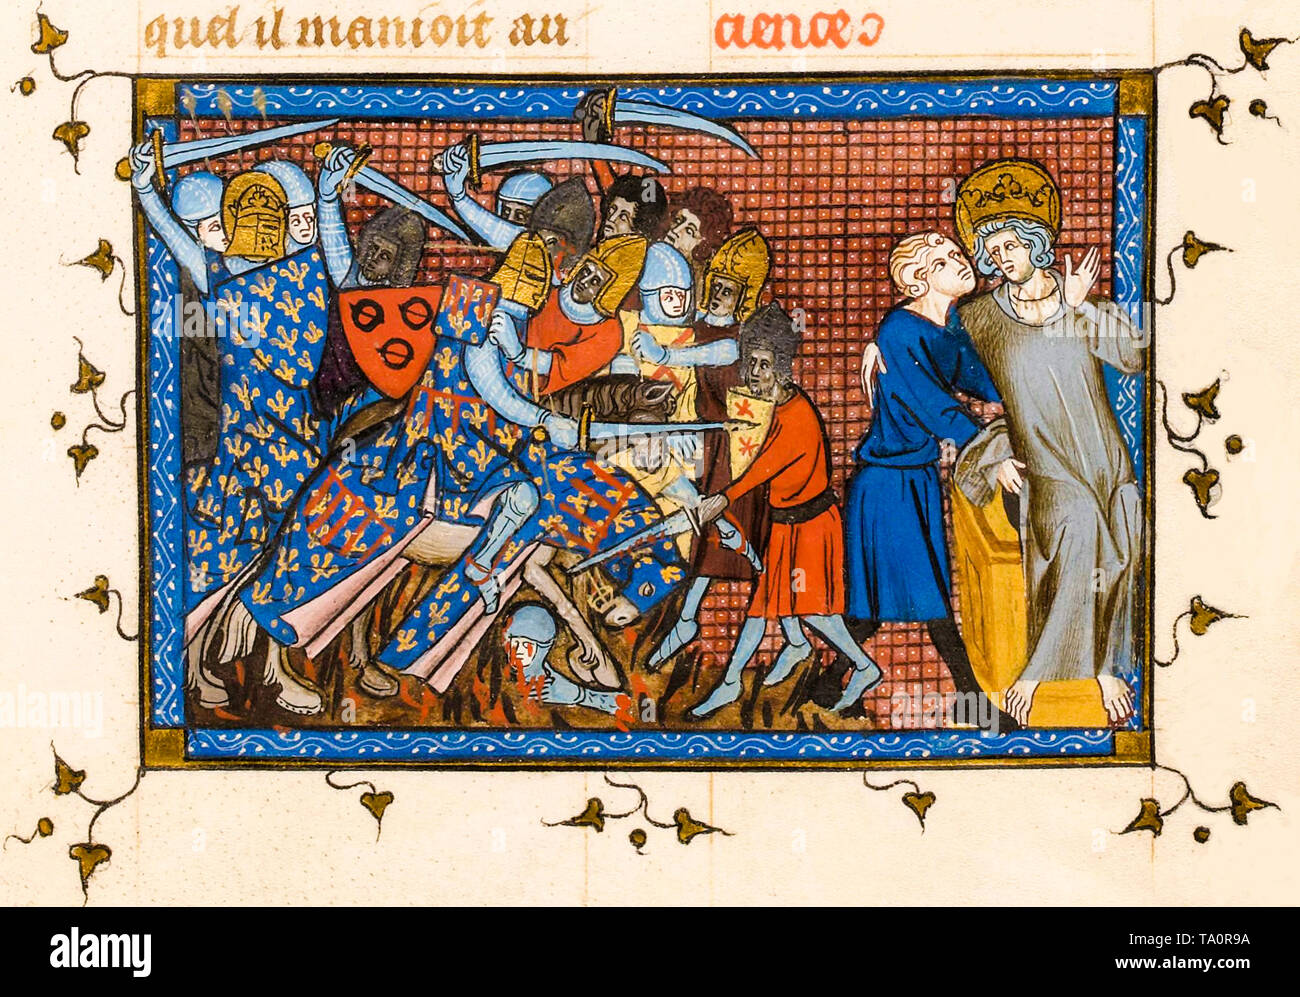 Knights Templar, Crusades, Battle of Al Mansurah, illuminated manuscript, circa 1330 Stock Photo